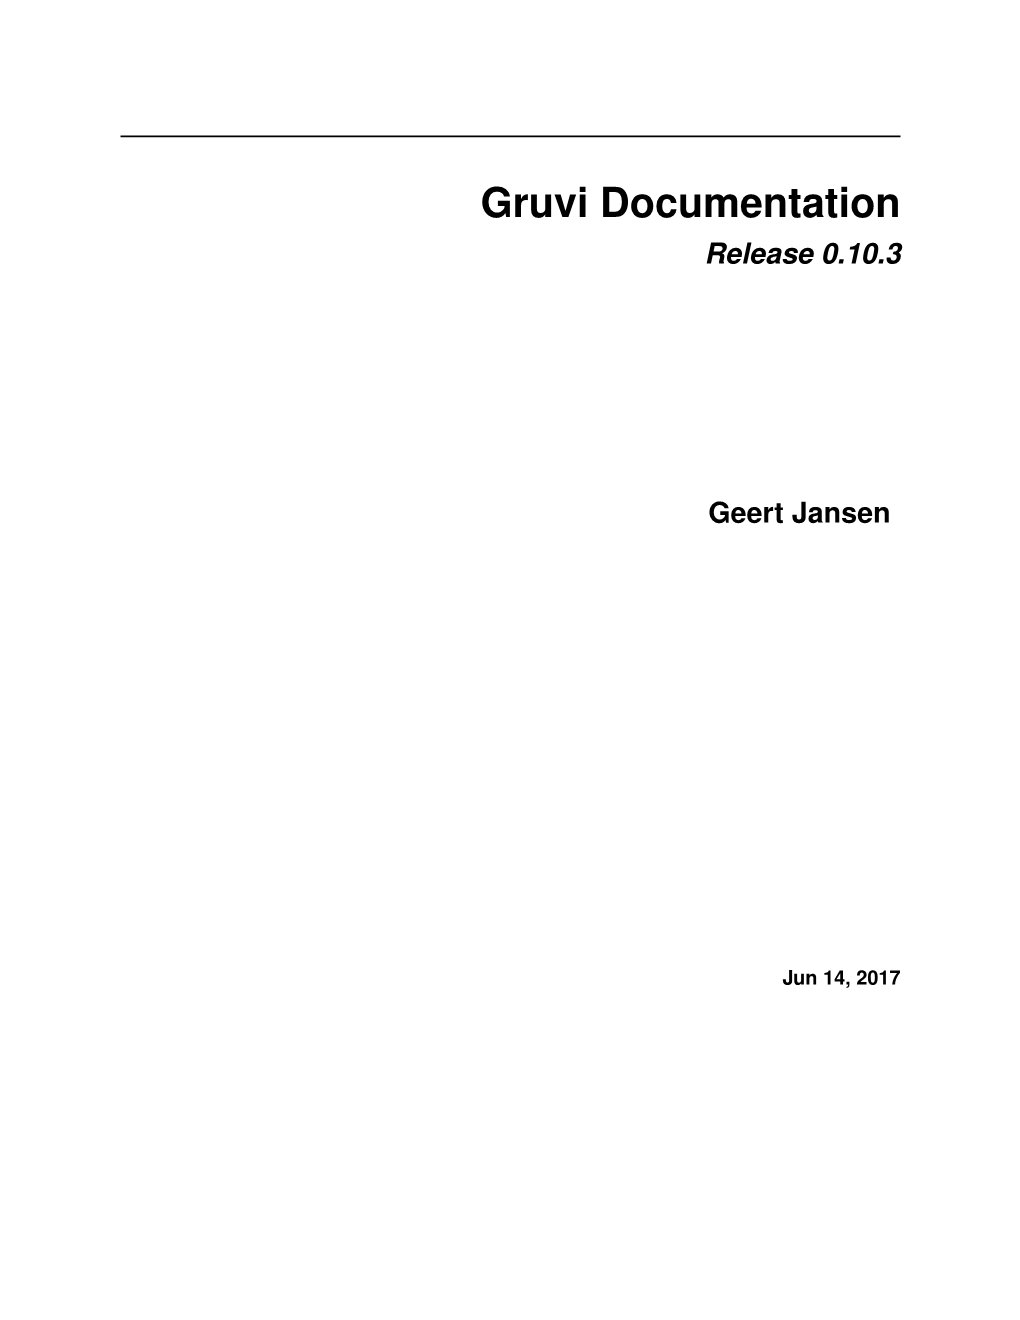 Gruvi Documentation Release 0.10.3